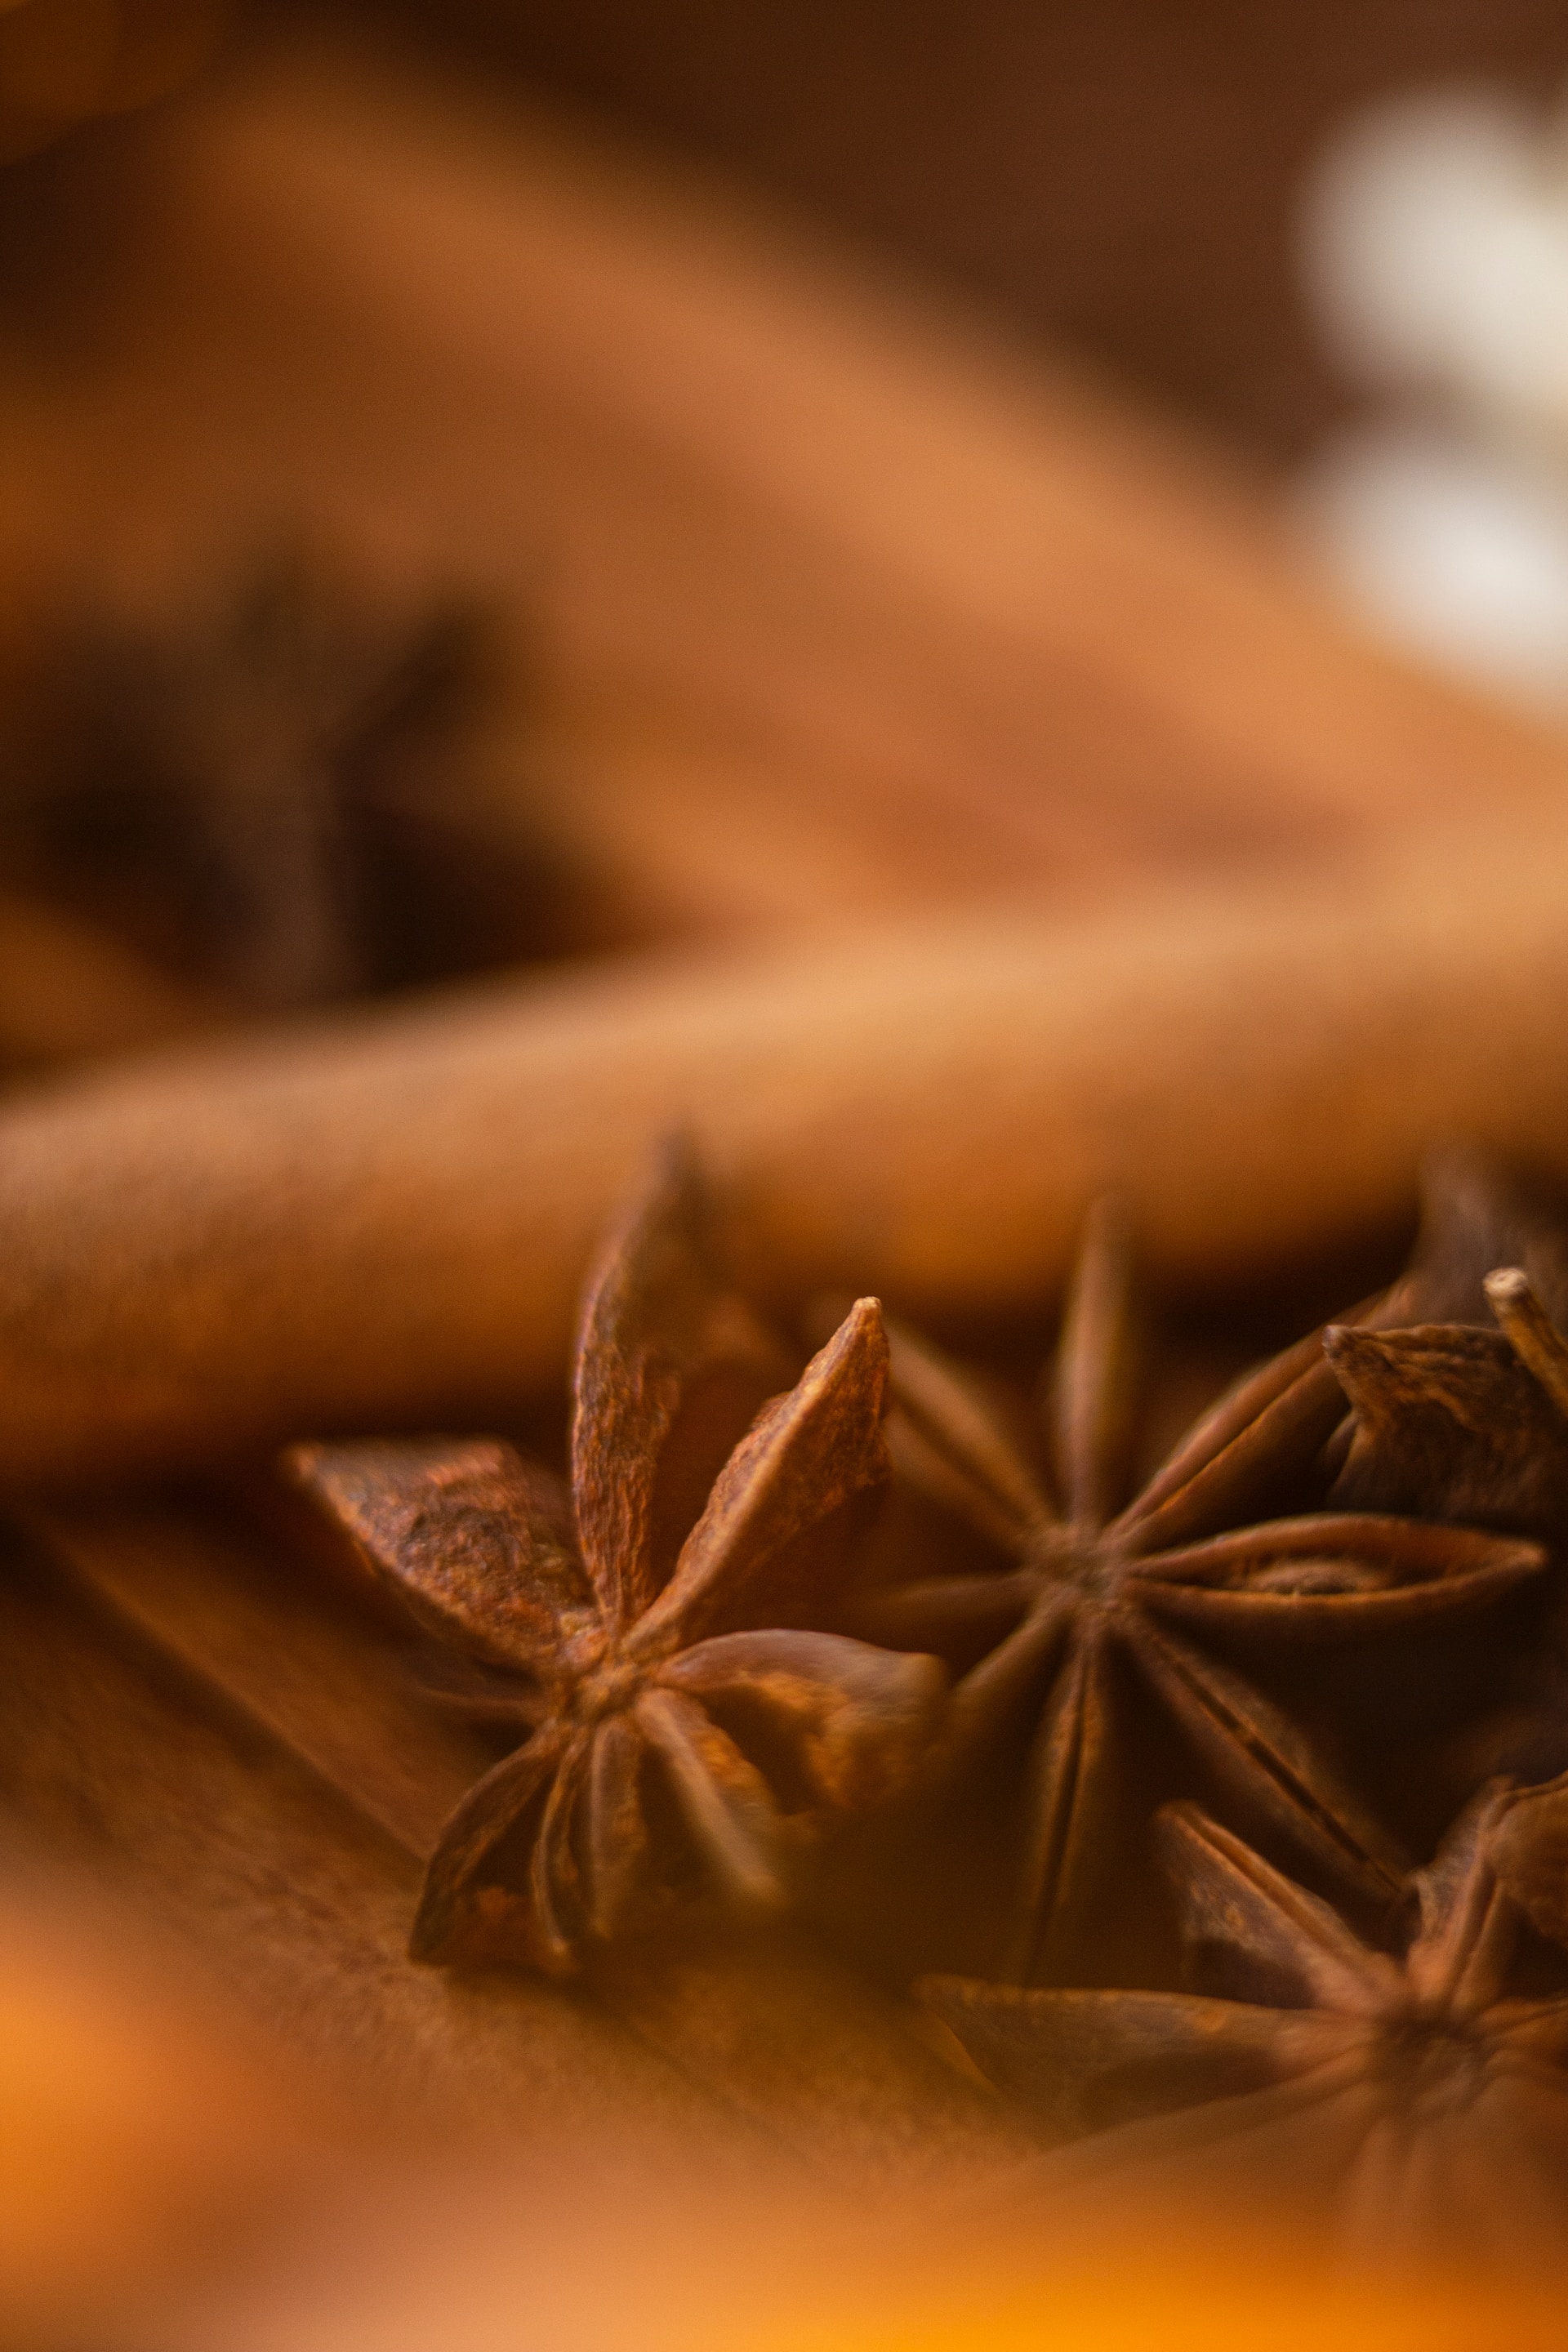 star anise and cinnamon